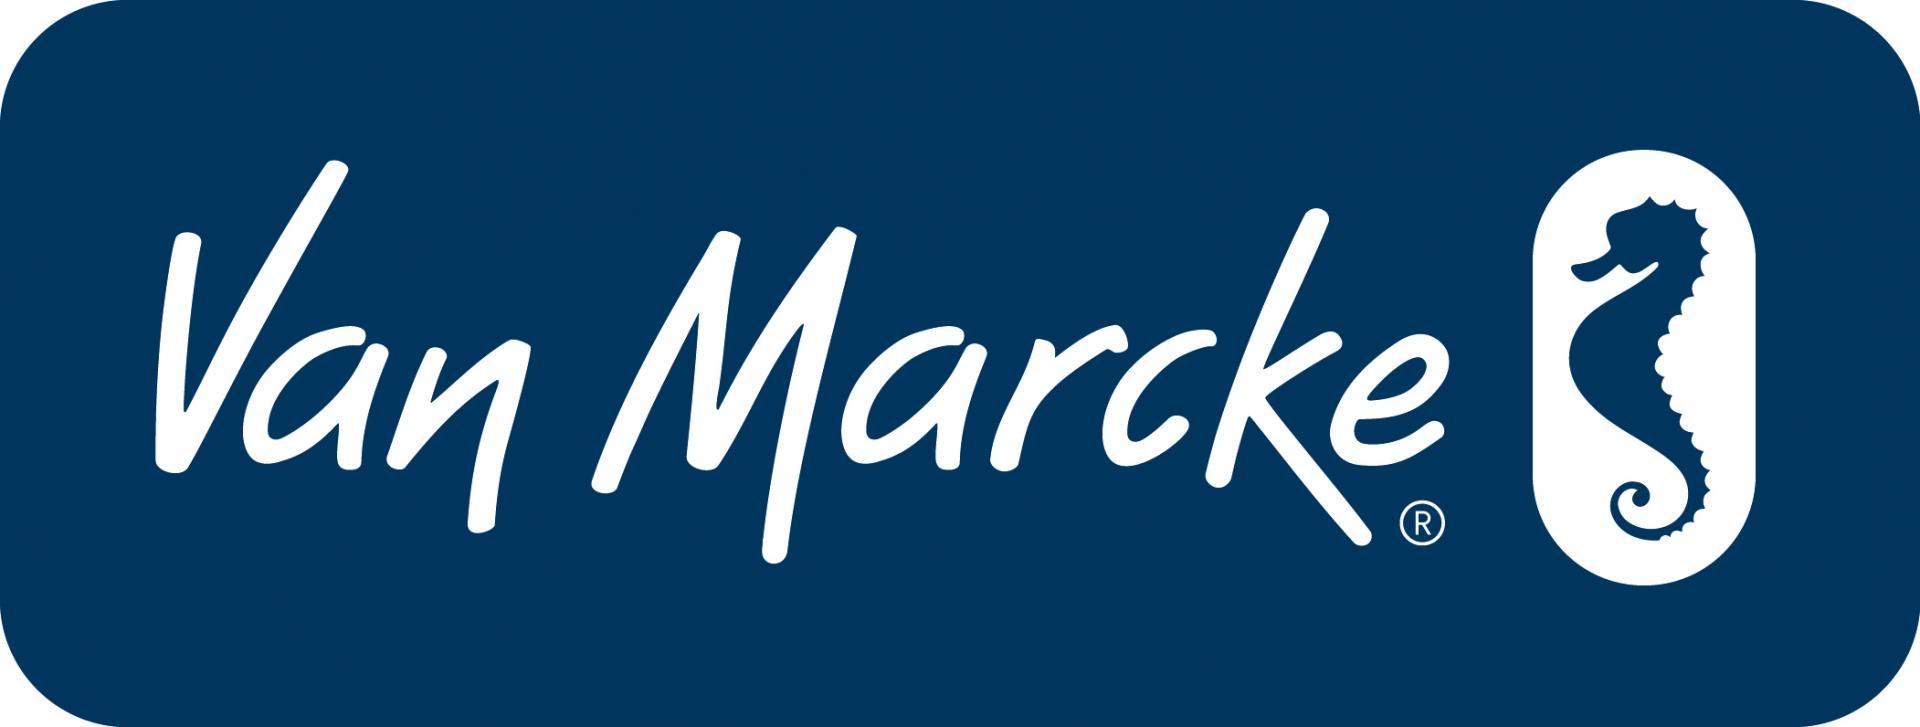 Vanmarcke logo